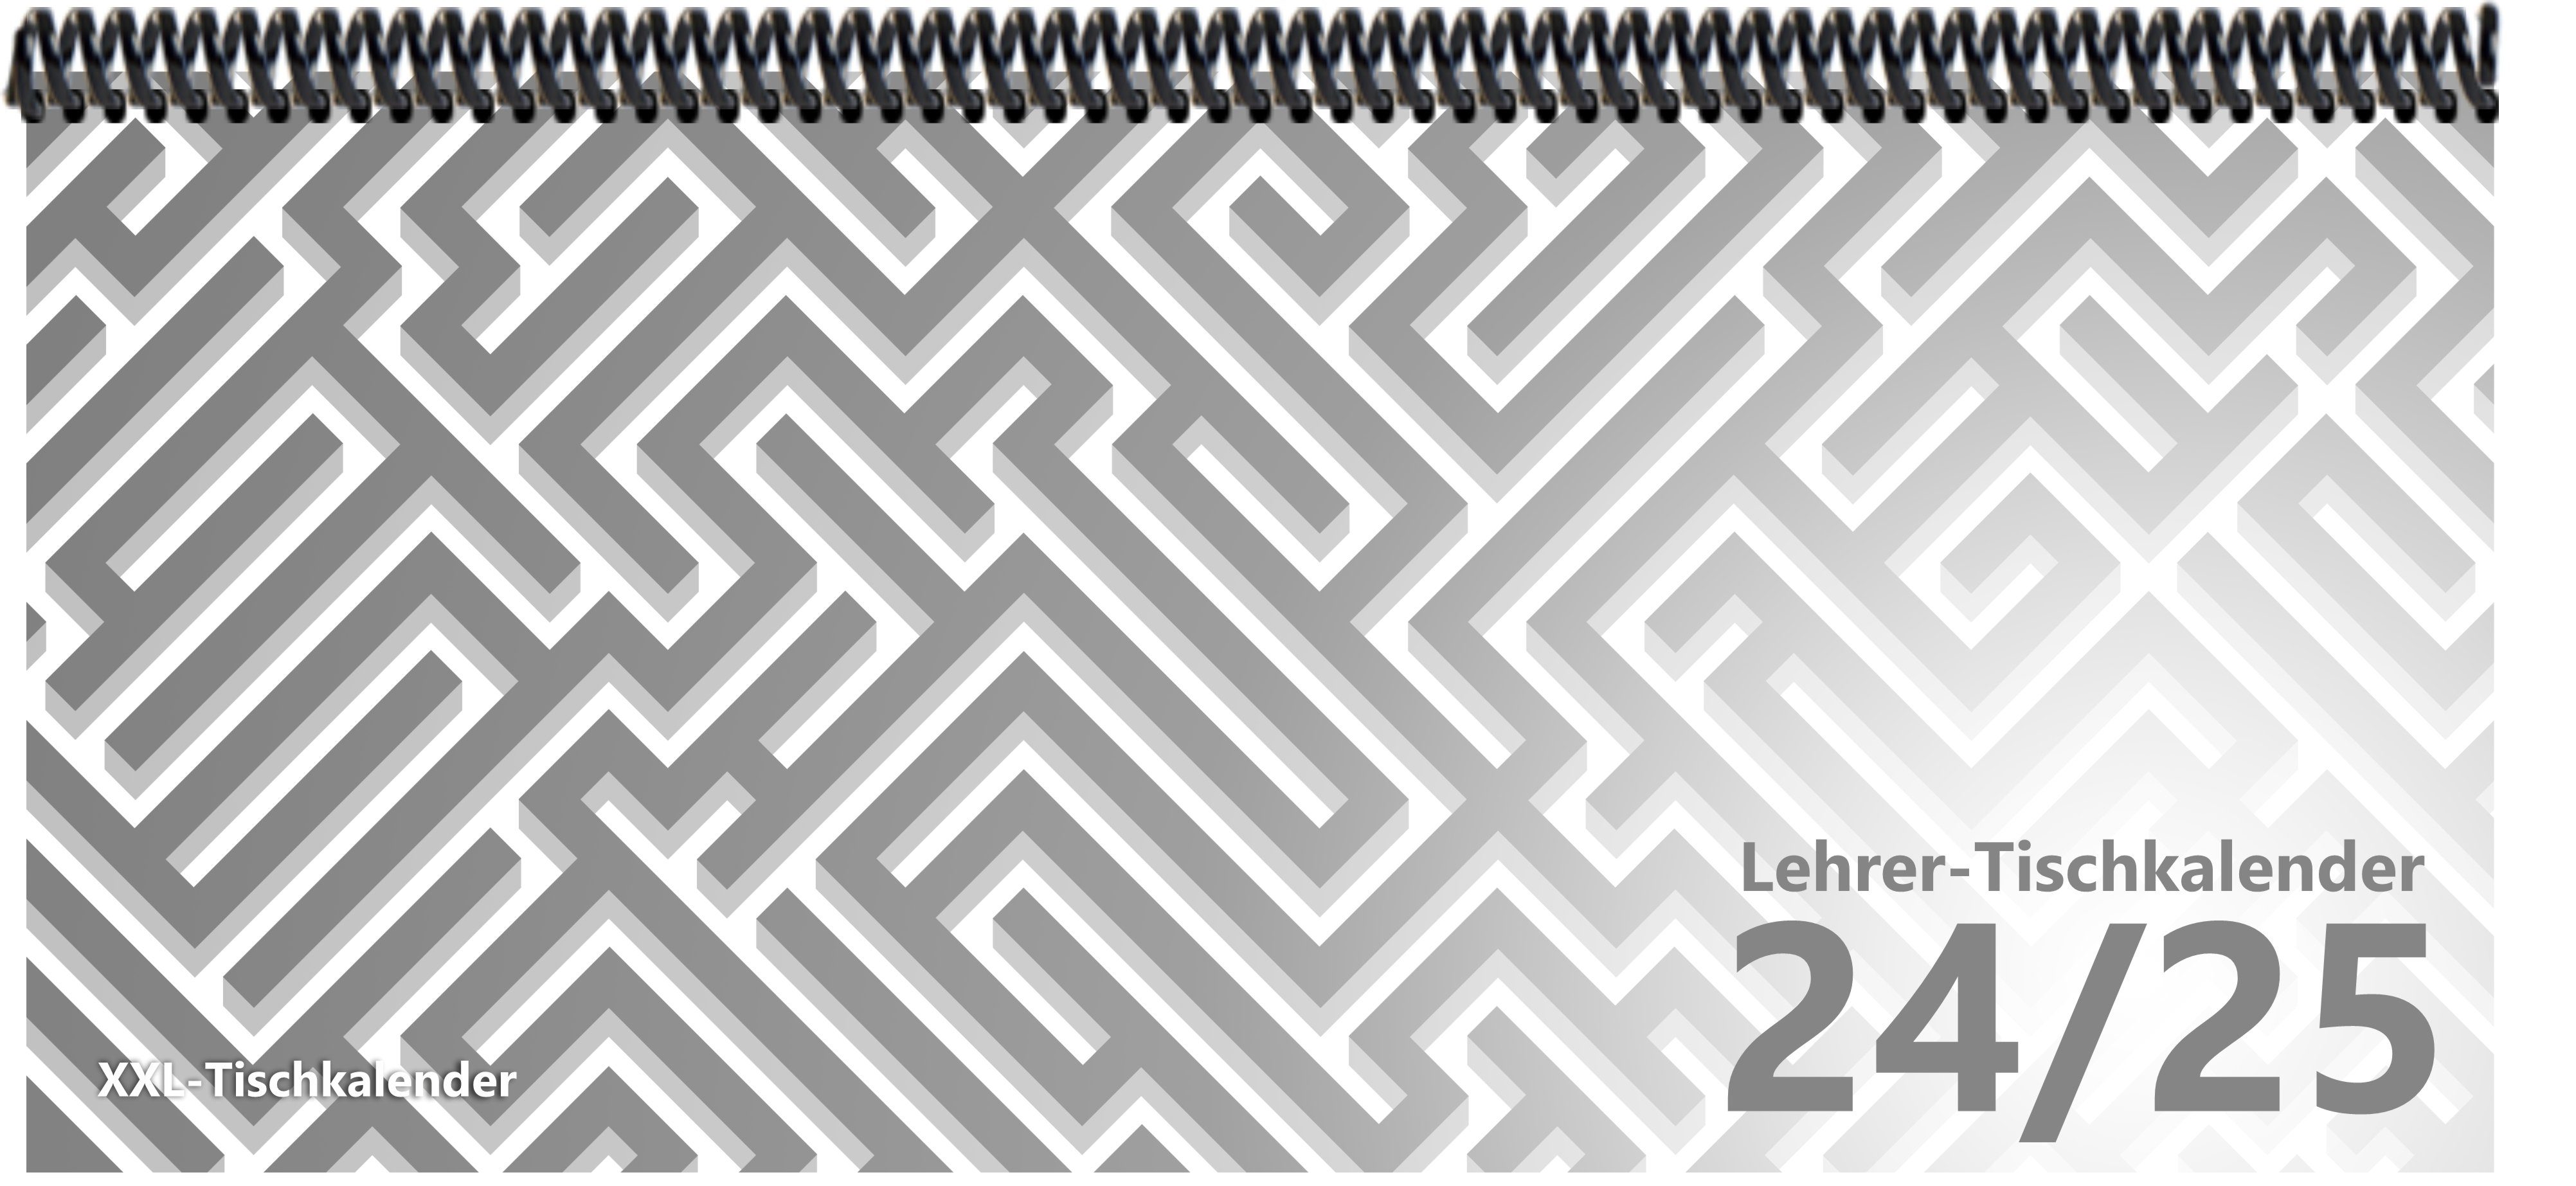 E&Z Verlag Gmbh Tischkalender Lehrer-Tischkalender 2024/2025 Labyrinth grau